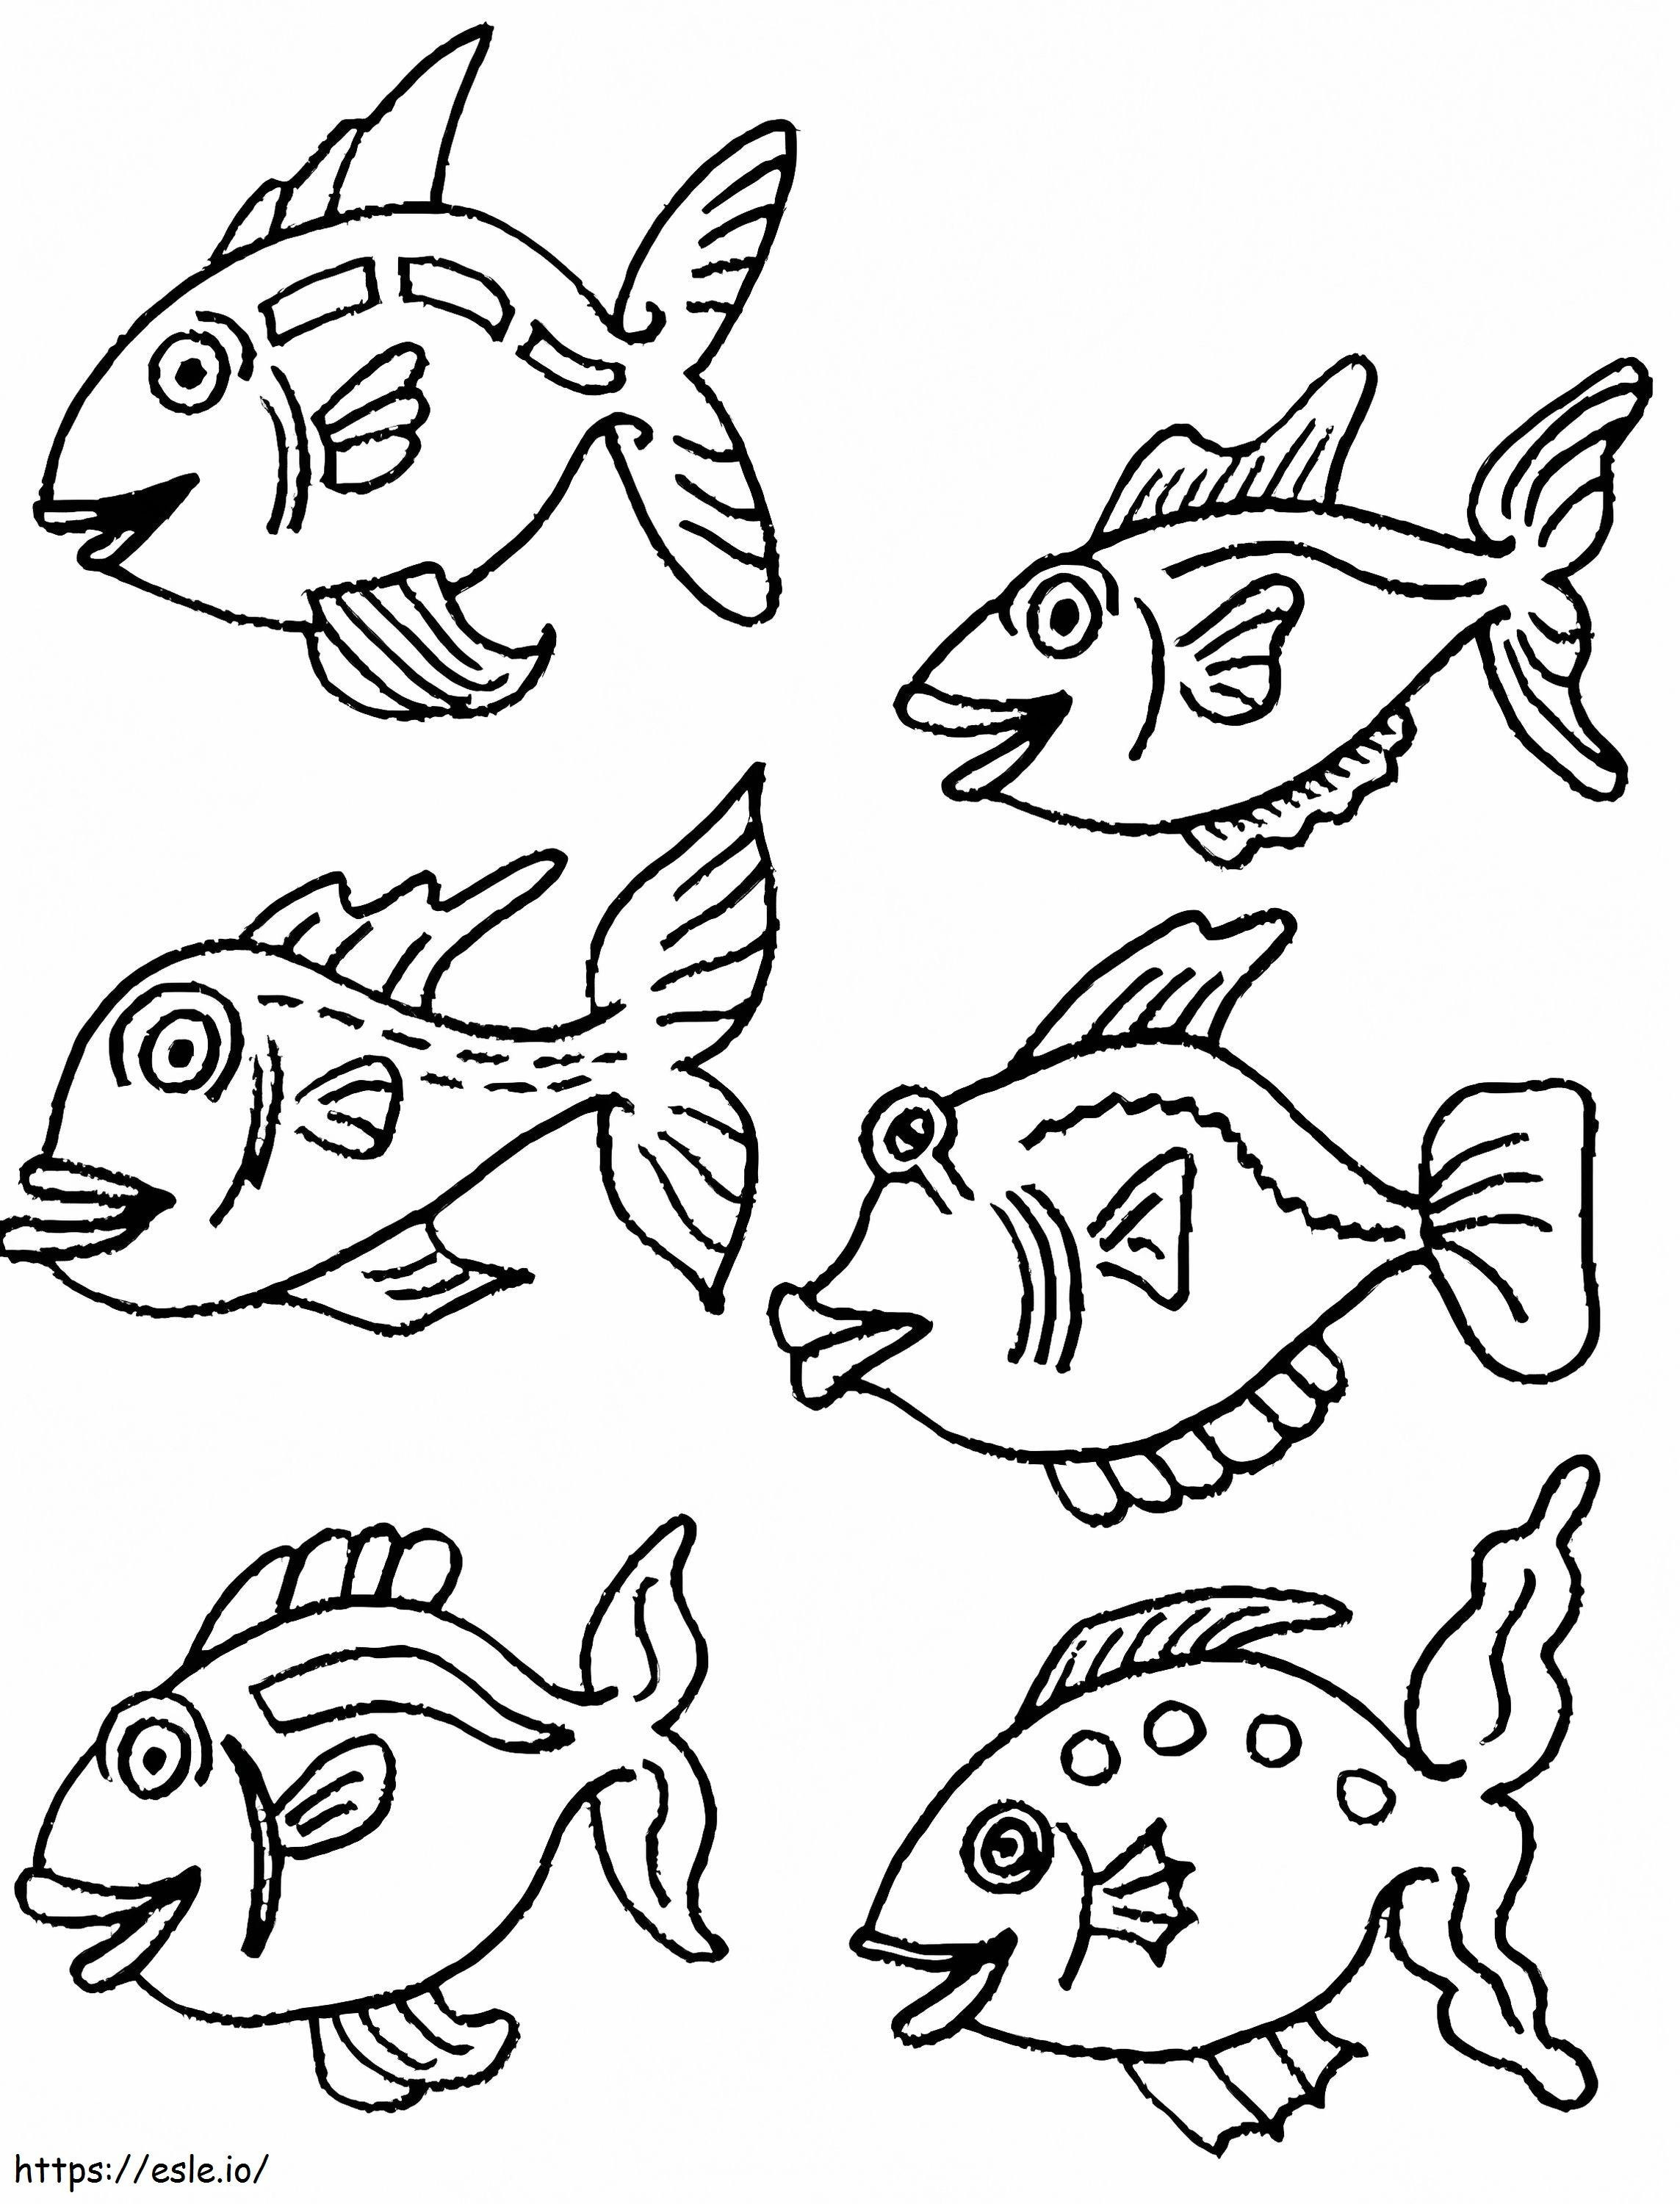 Hat hal kifestő